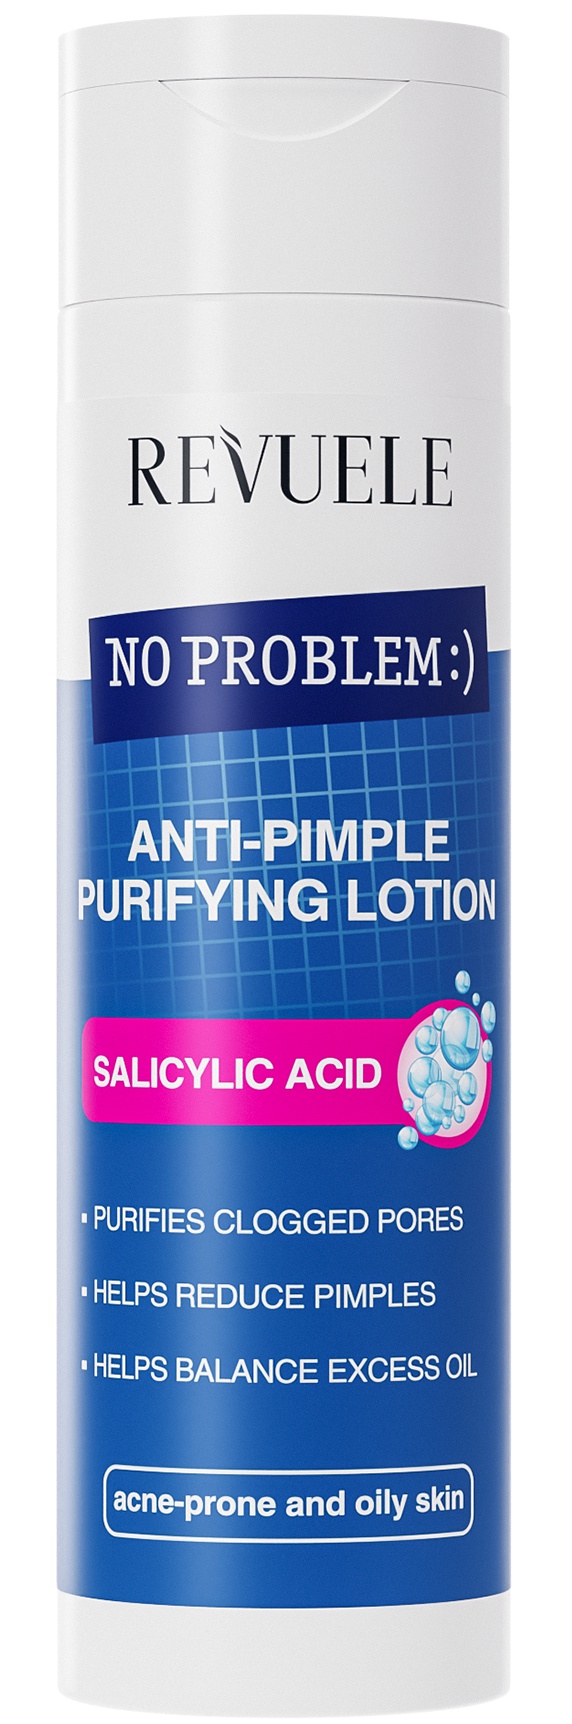 Revuele No Problem Anti-Pimple Purifying Lotion Salicylic Acid